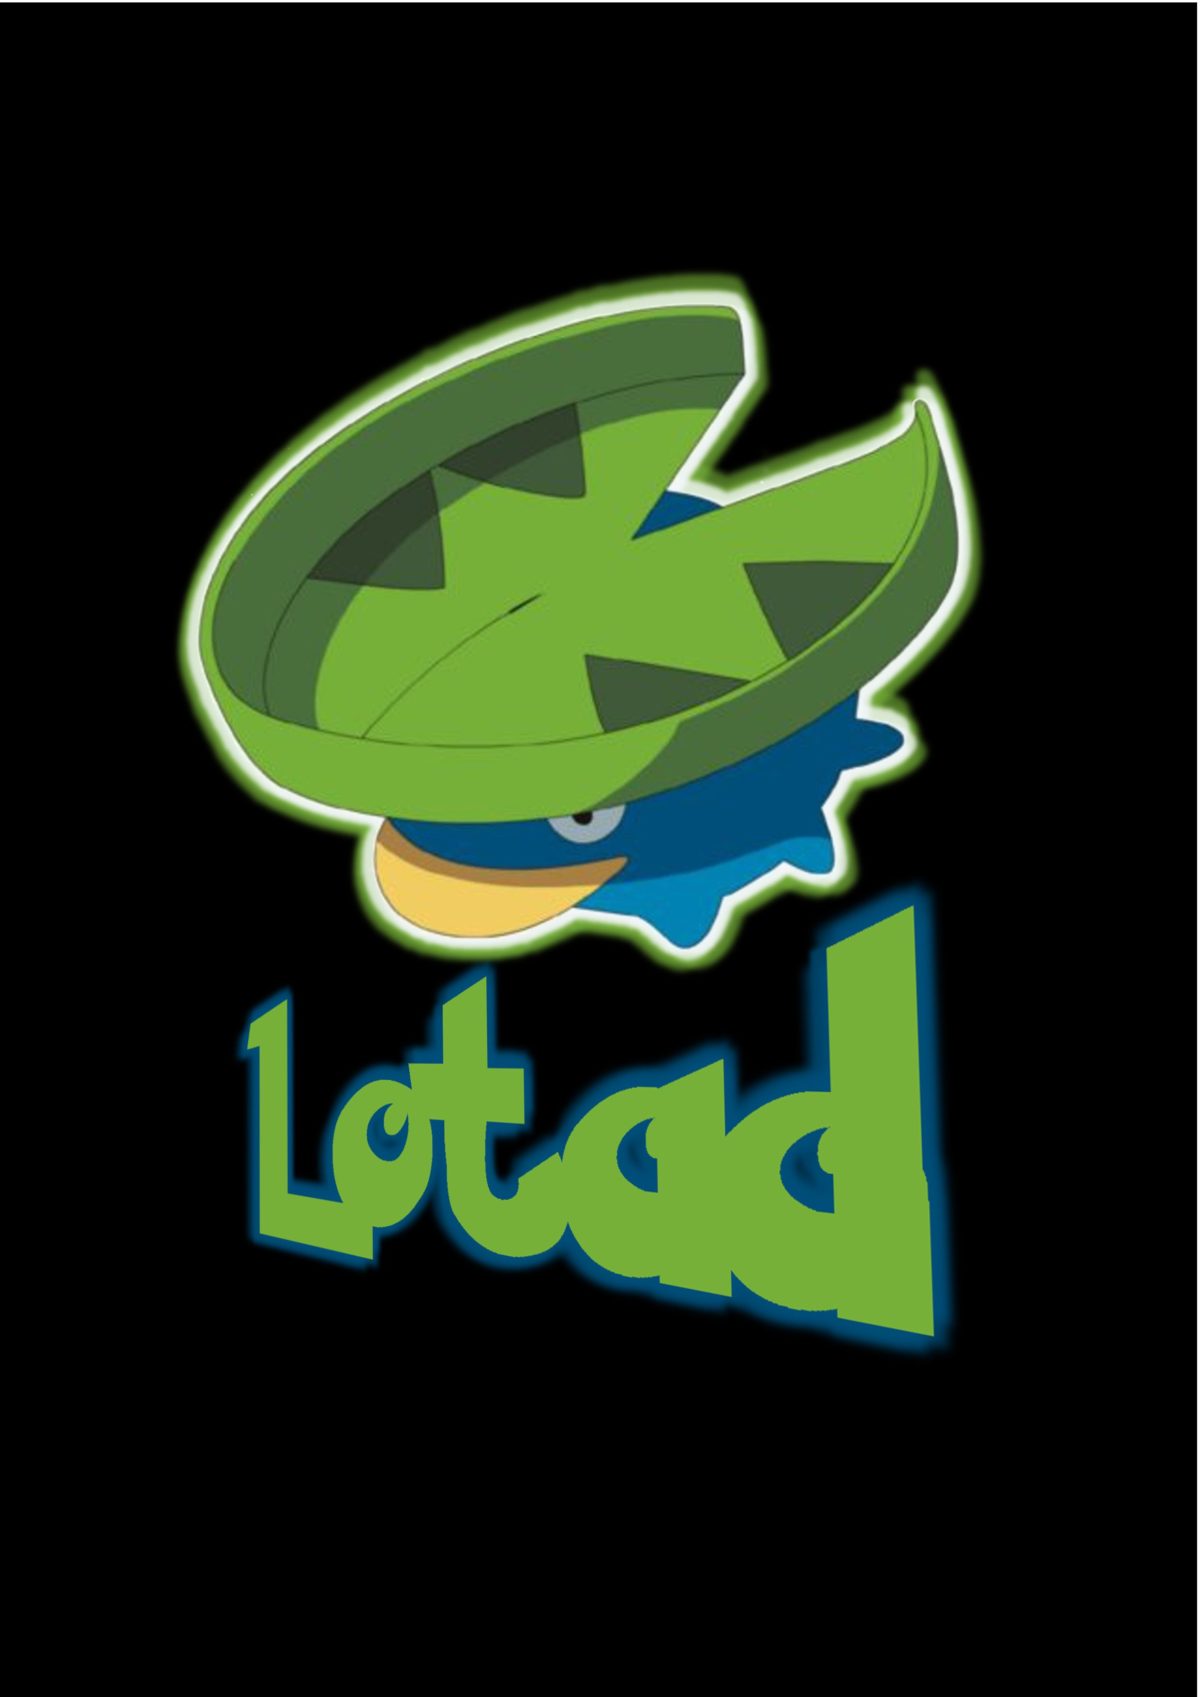 Lotad (T-Shirt idea) by NordicBerry on DeviantArt